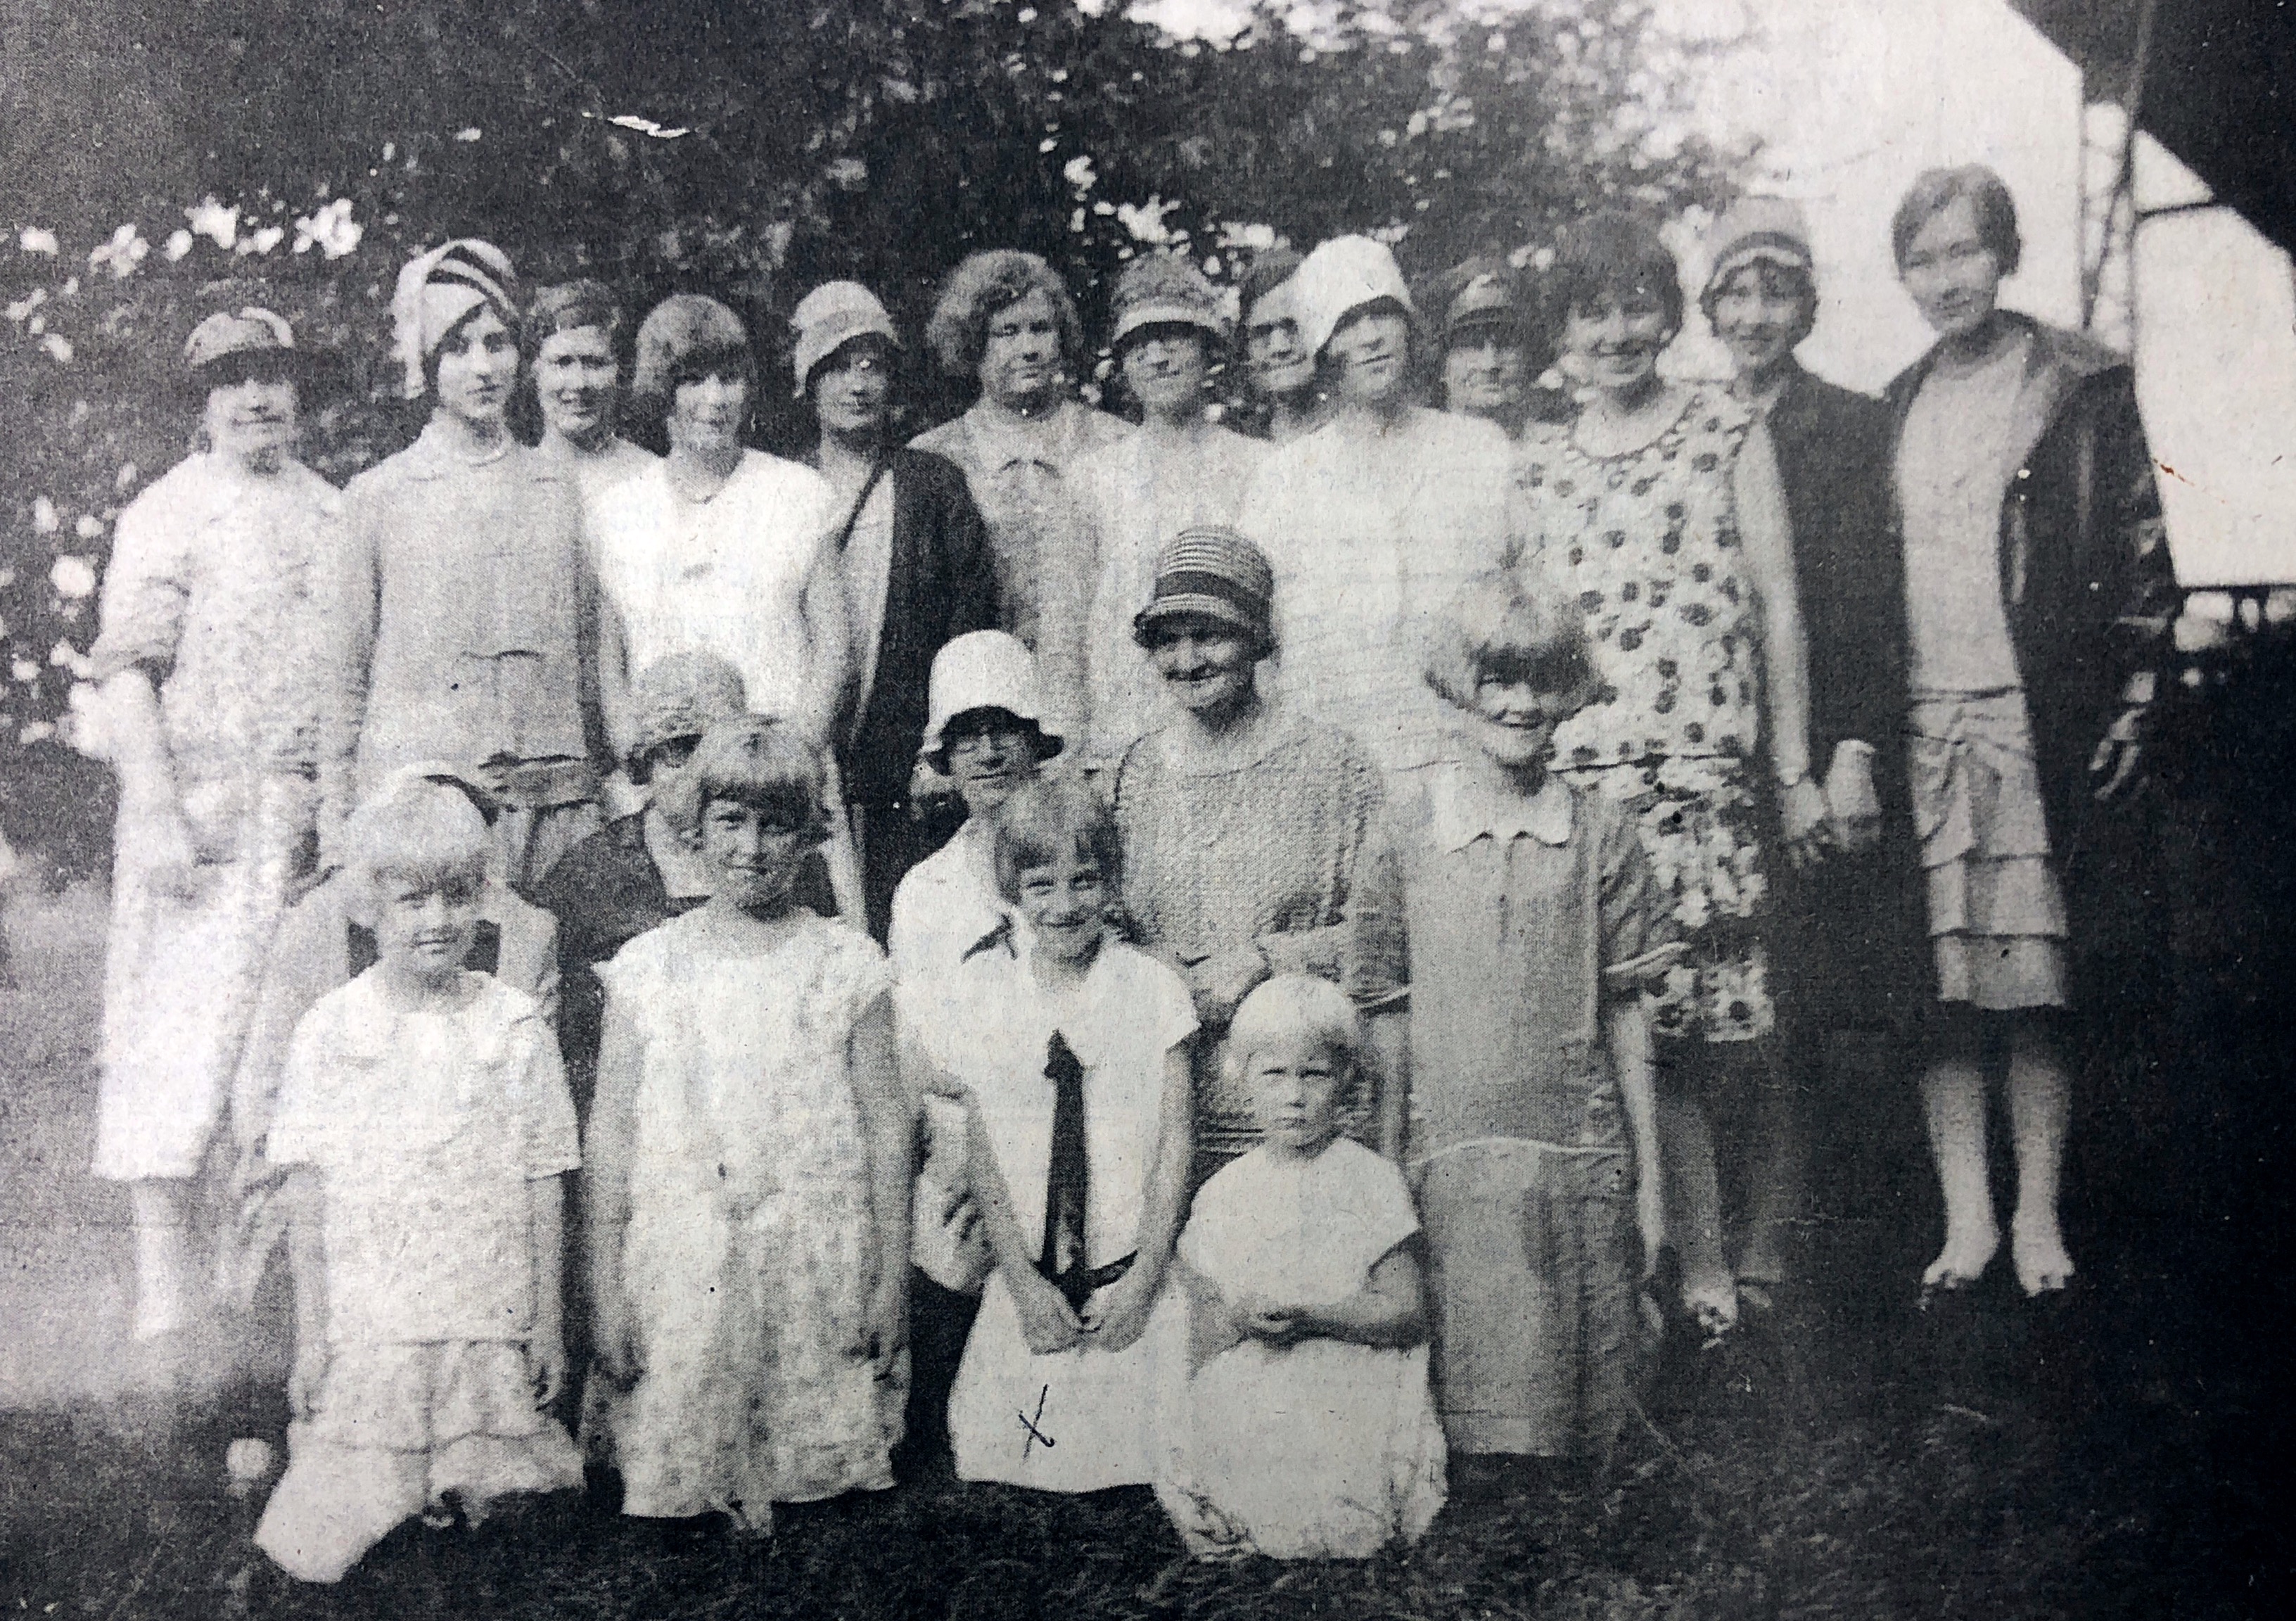 1928 Westrum Reunion women